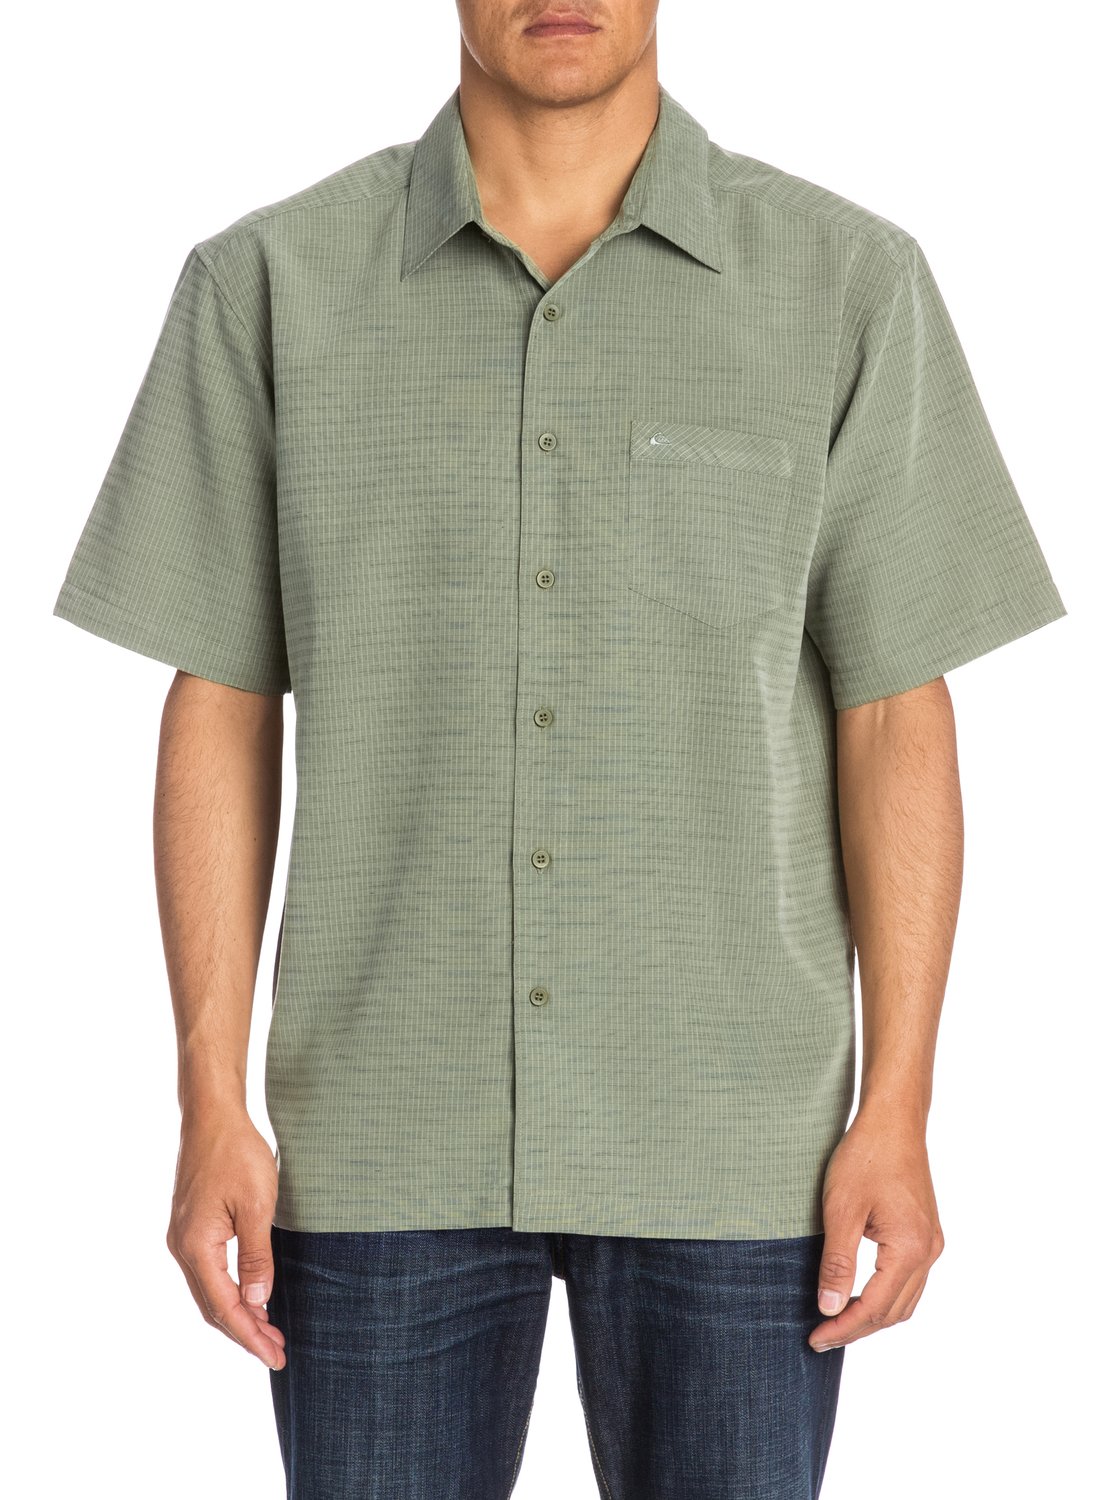 Quiksilver™ Waterman Centinela Short Sleeve Shirt AQMWT03106 | eBay